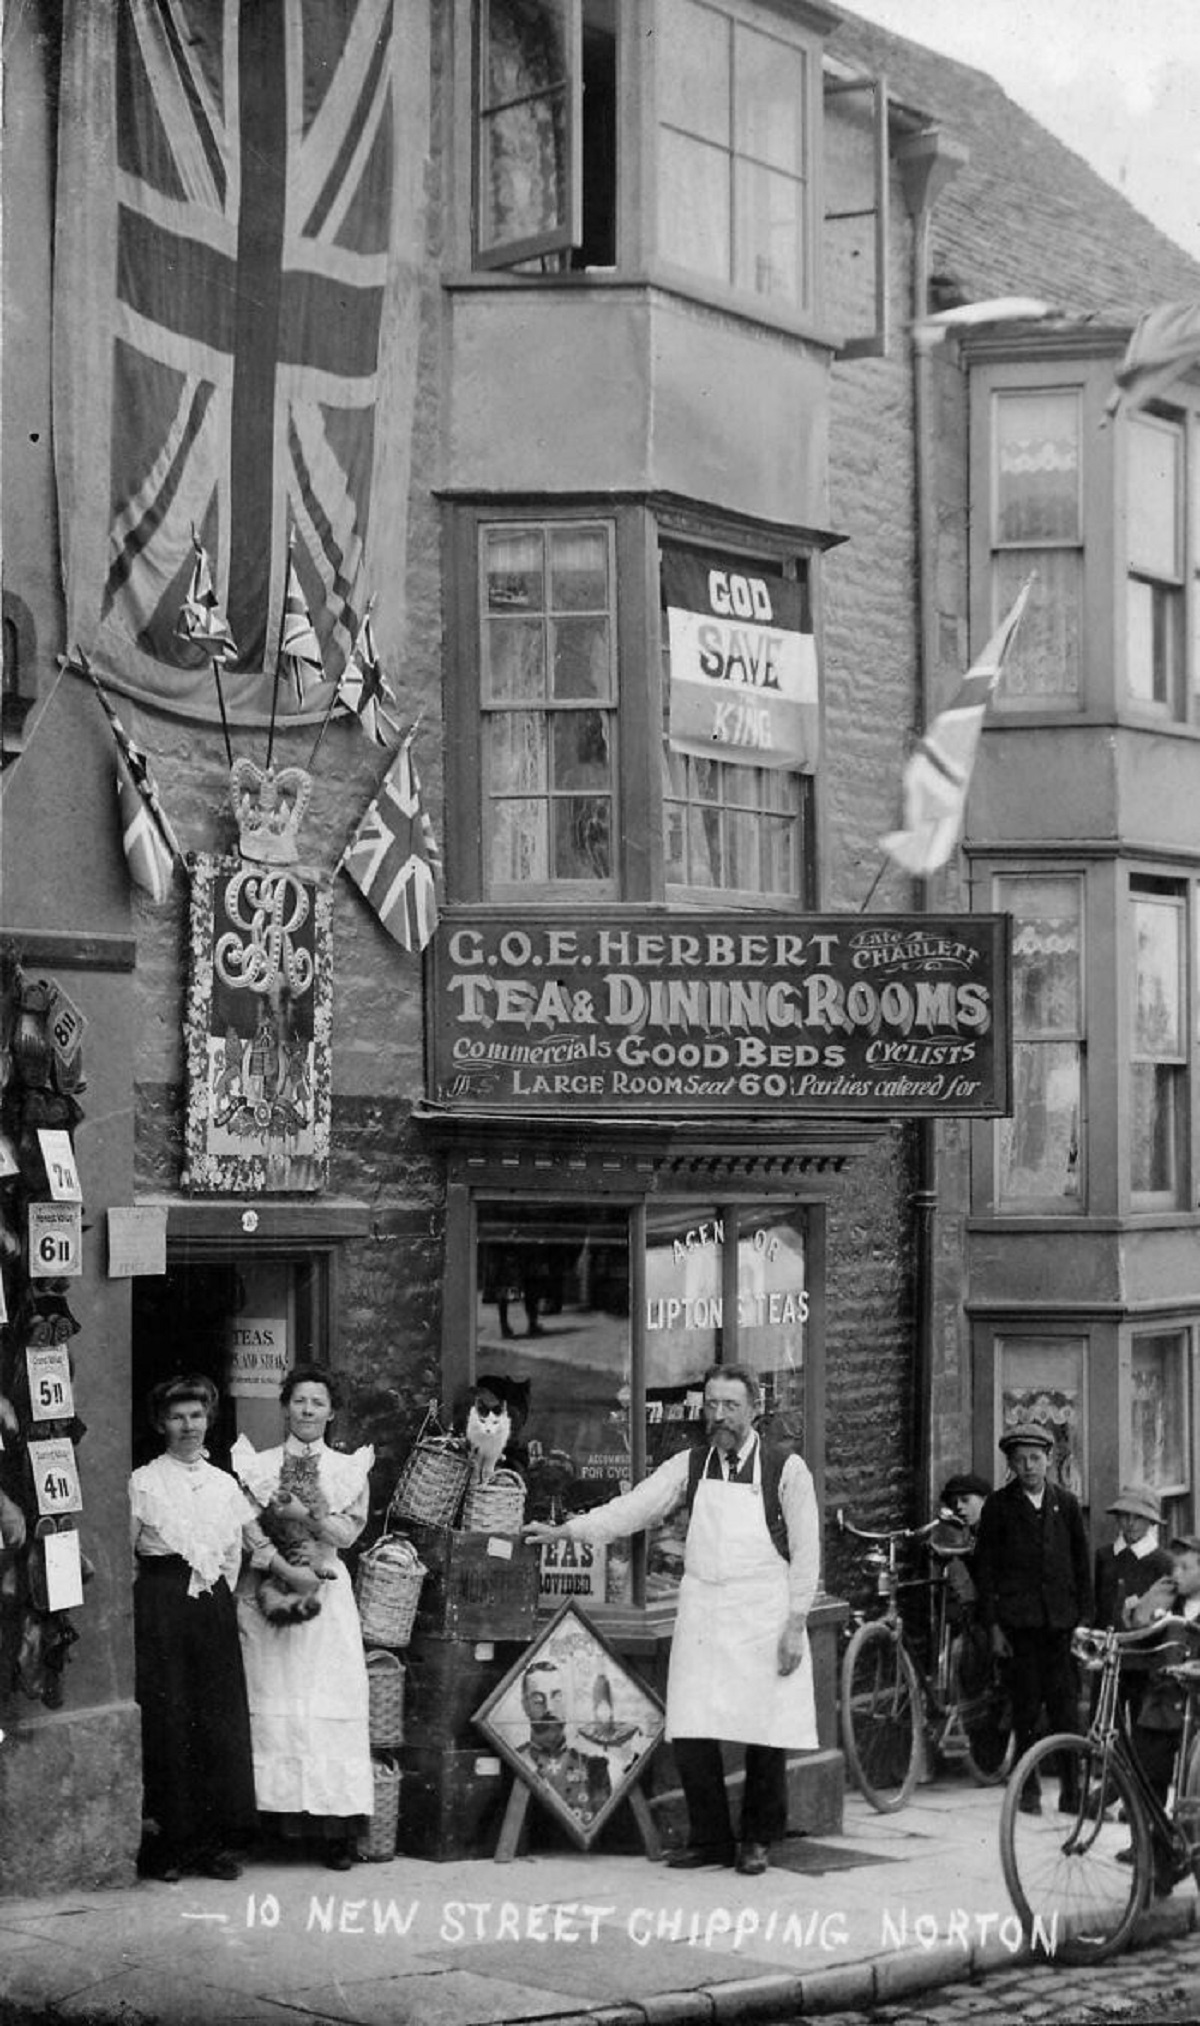 G.o.e Herbert Tea & Dining Rooms, 10 New Street, Chipping Norton, England. 1910